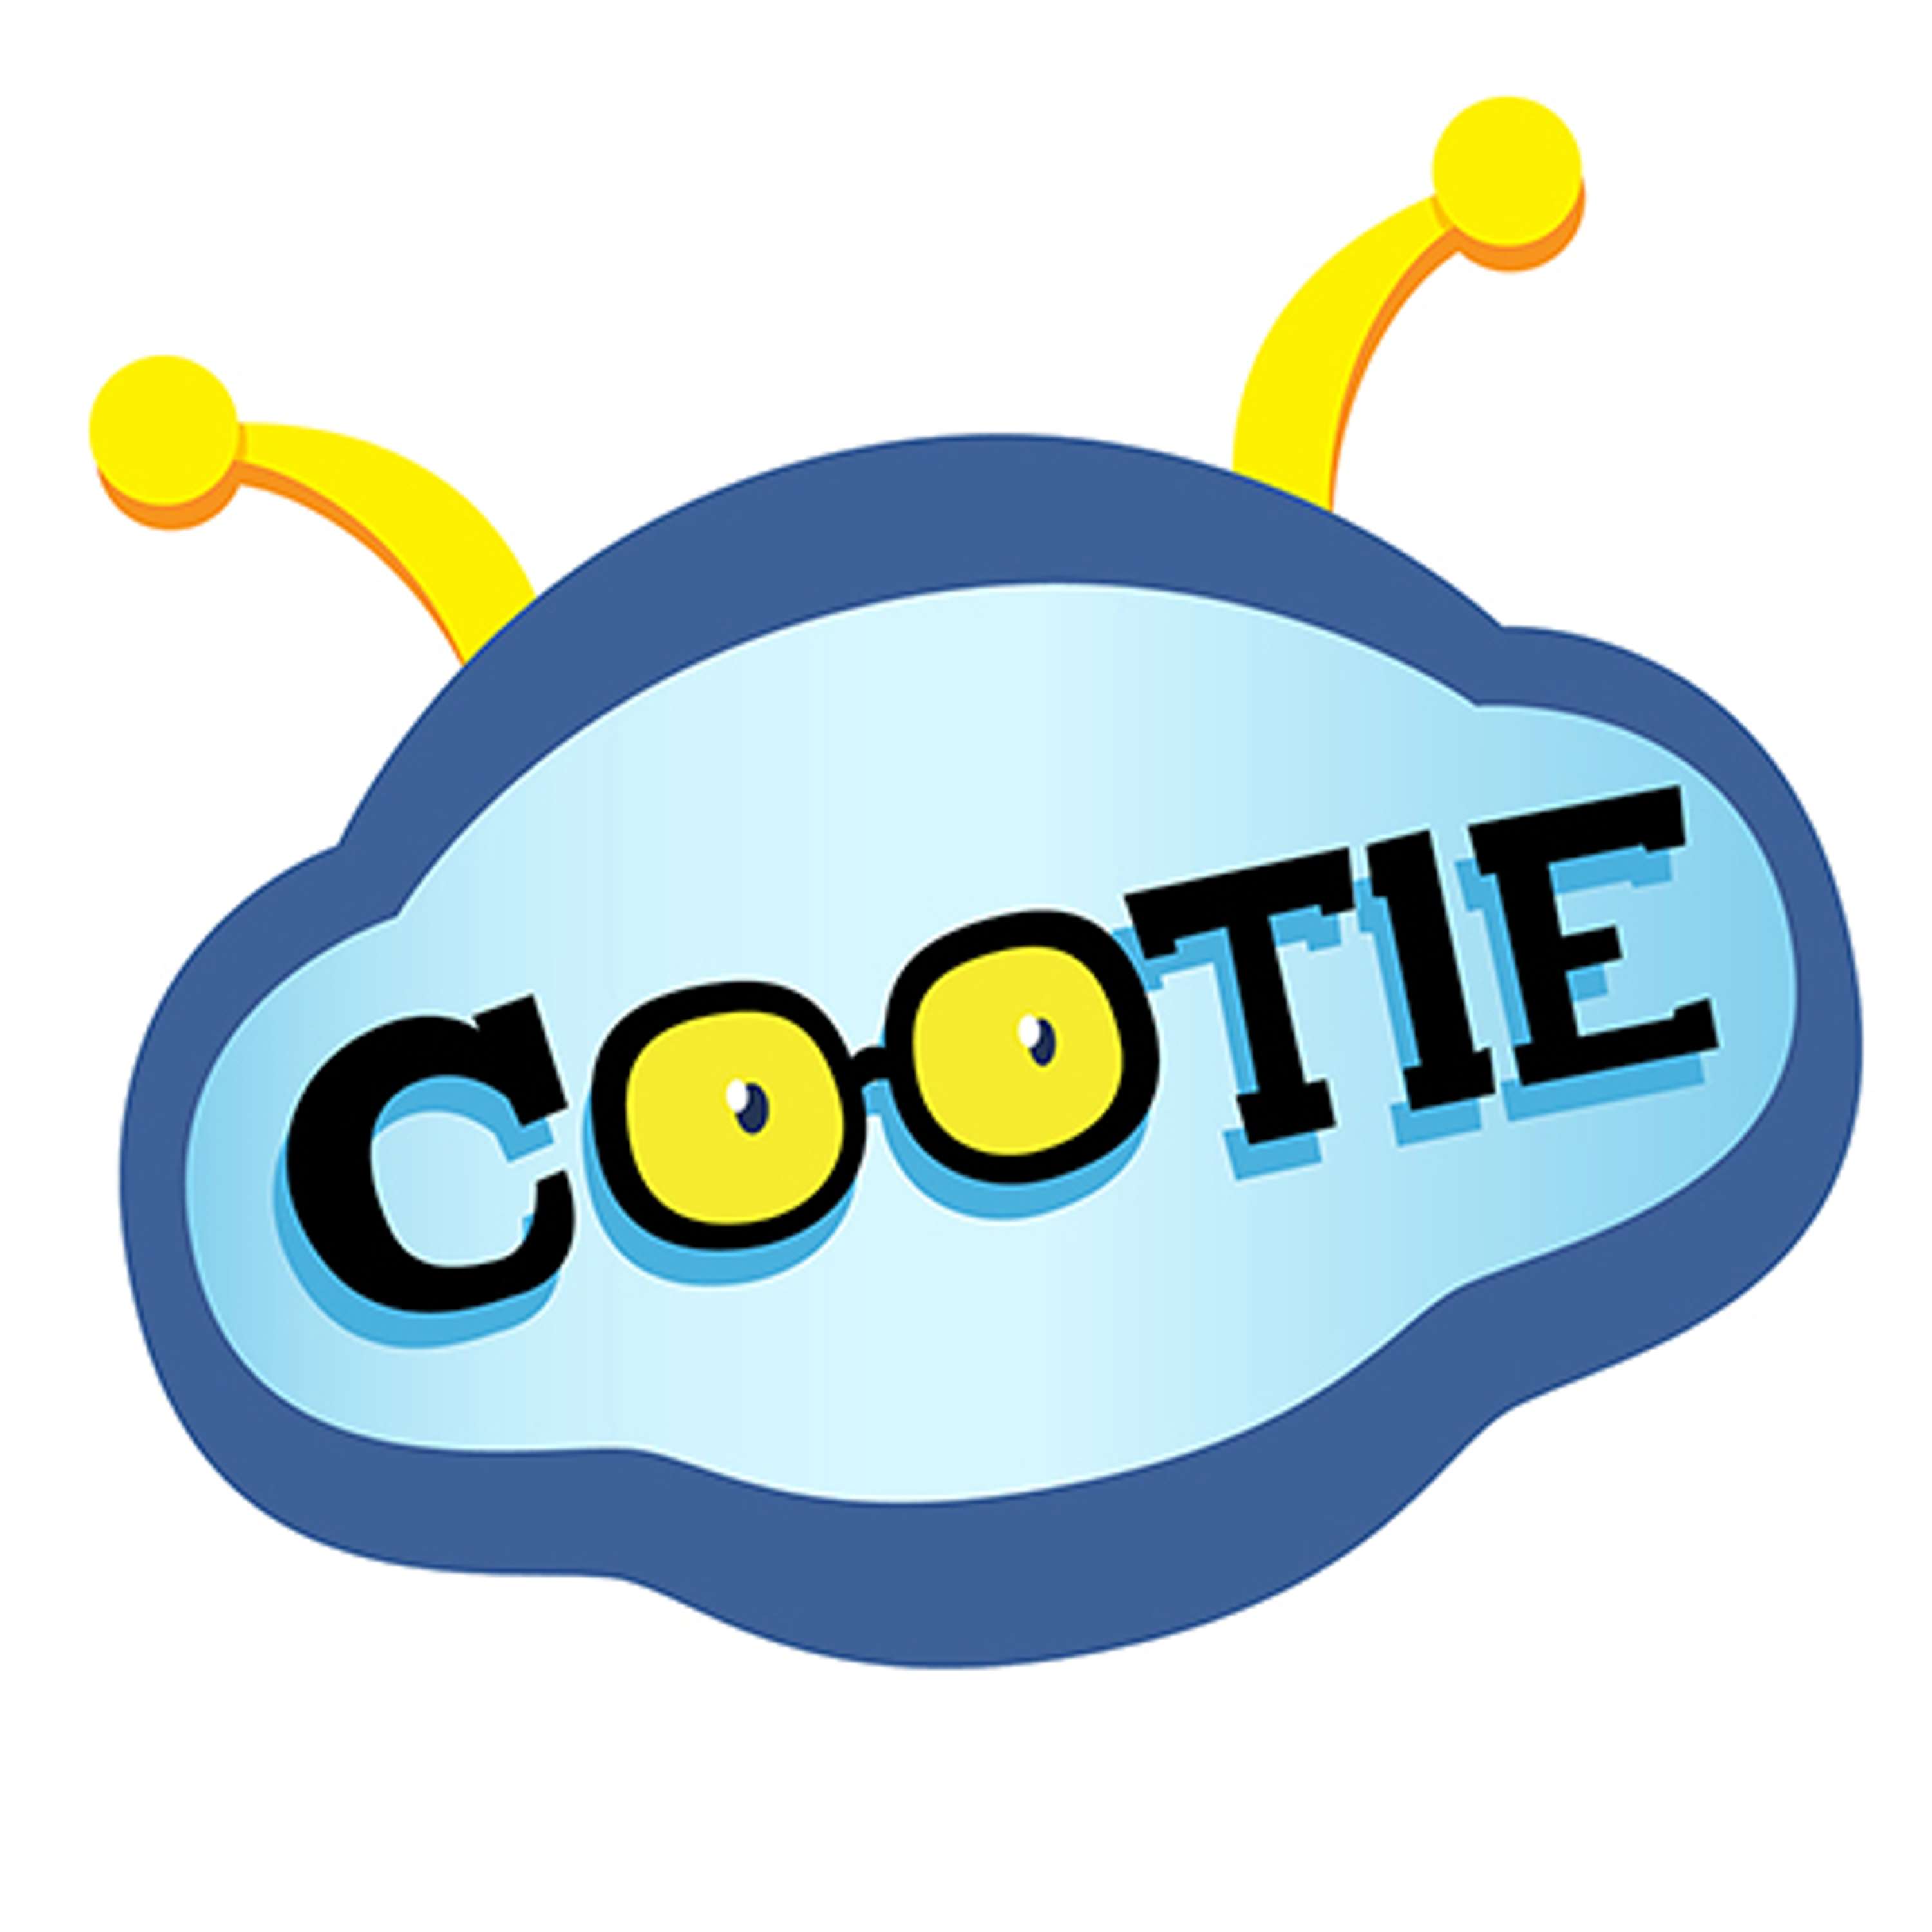 cooties game